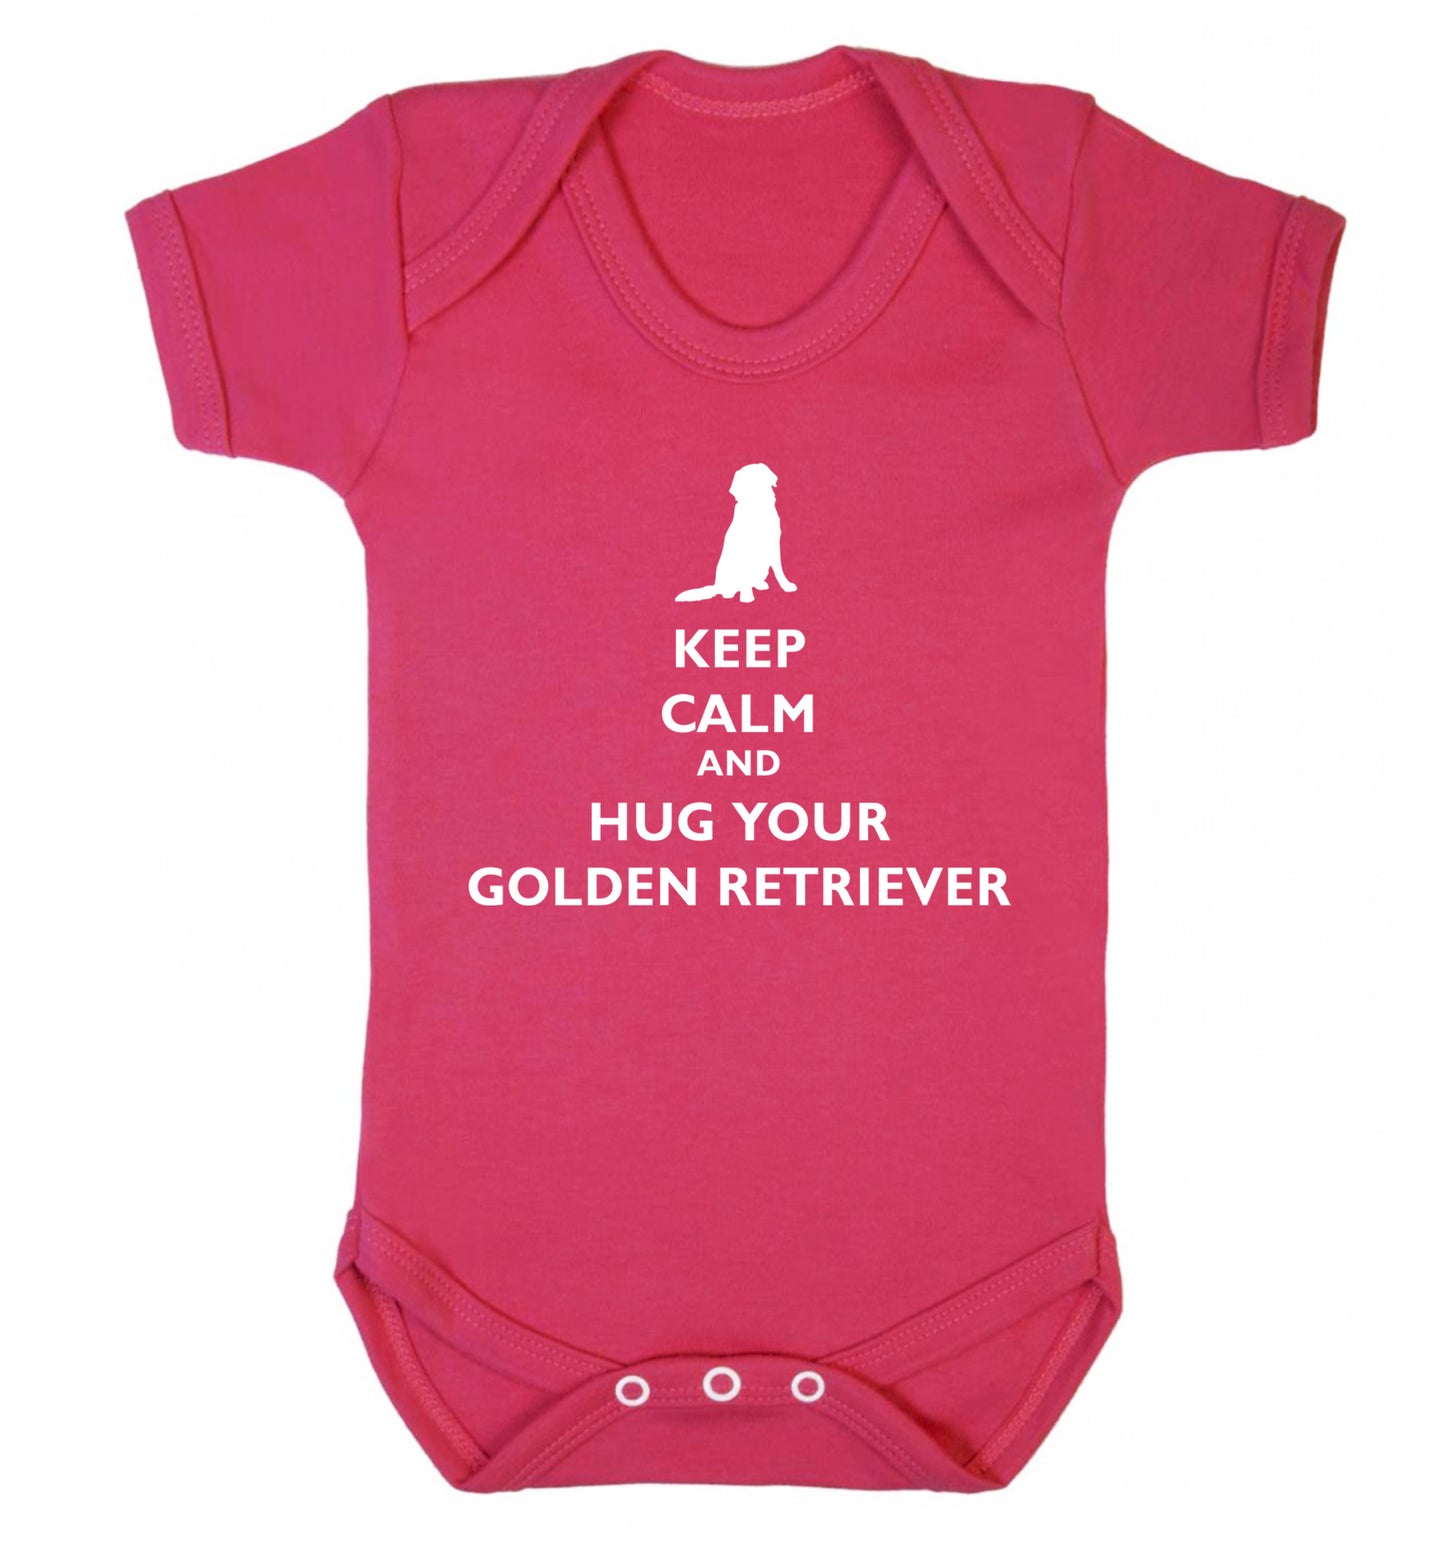 Keep calm and hug your golden retriever Baby Vest dark pink 18-24 months